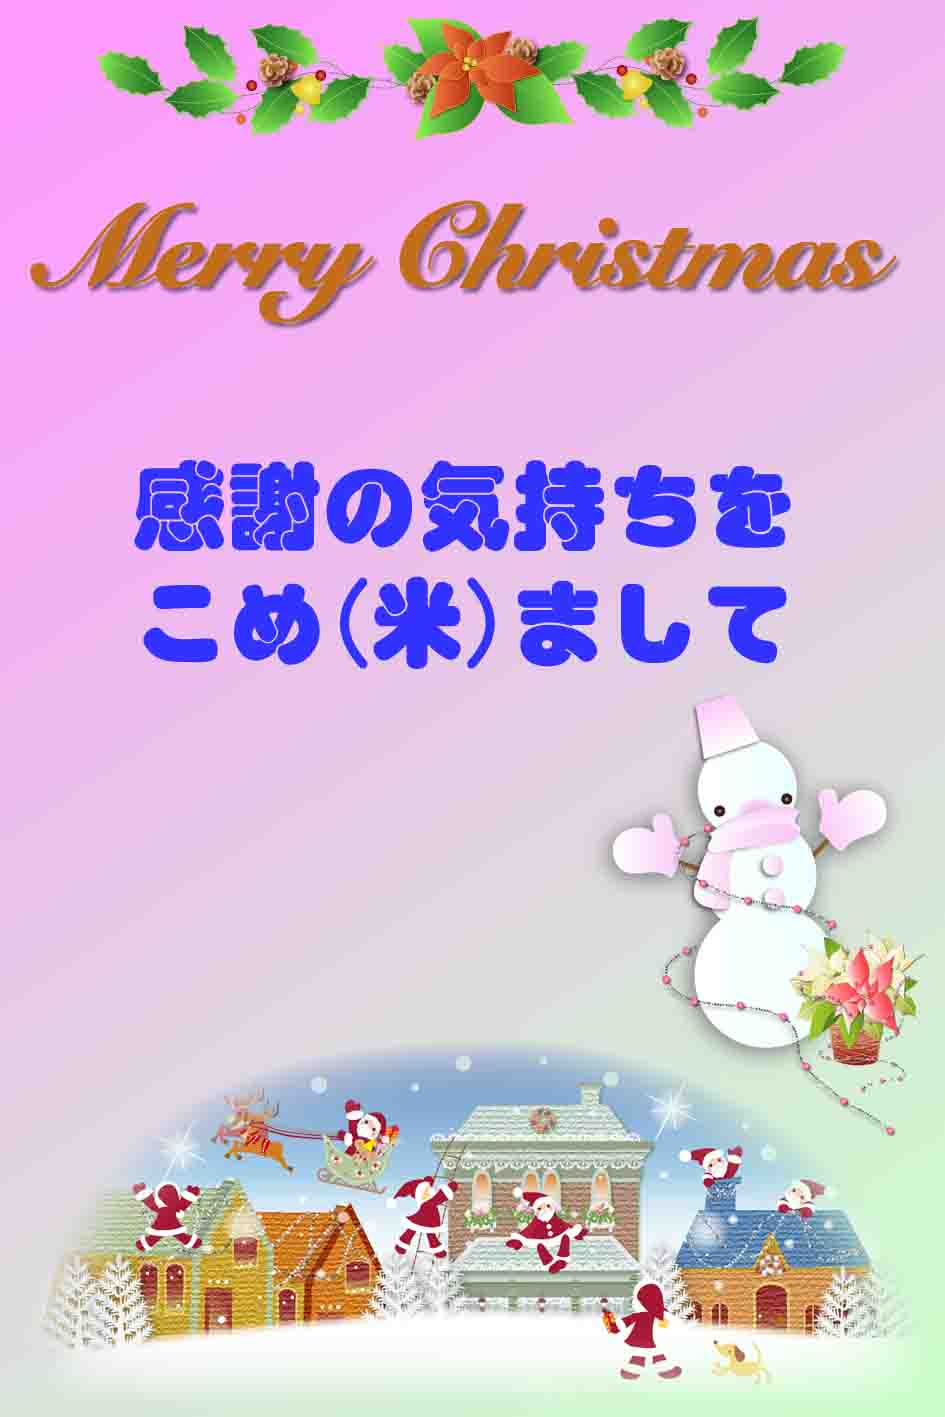 http://www.107heaven-earth.com/zoutou/merry_christmas.jpg